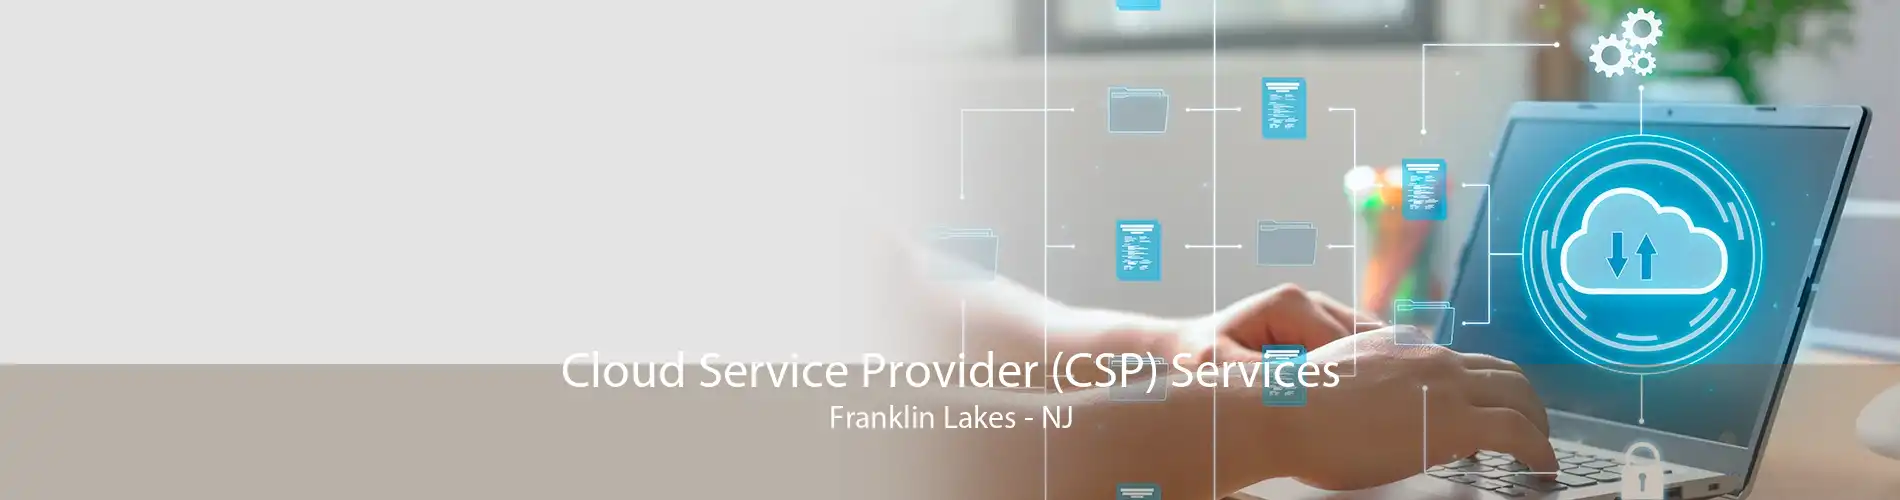 Cloud Service Provider (CSP) Services Franklin Lakes - NJ